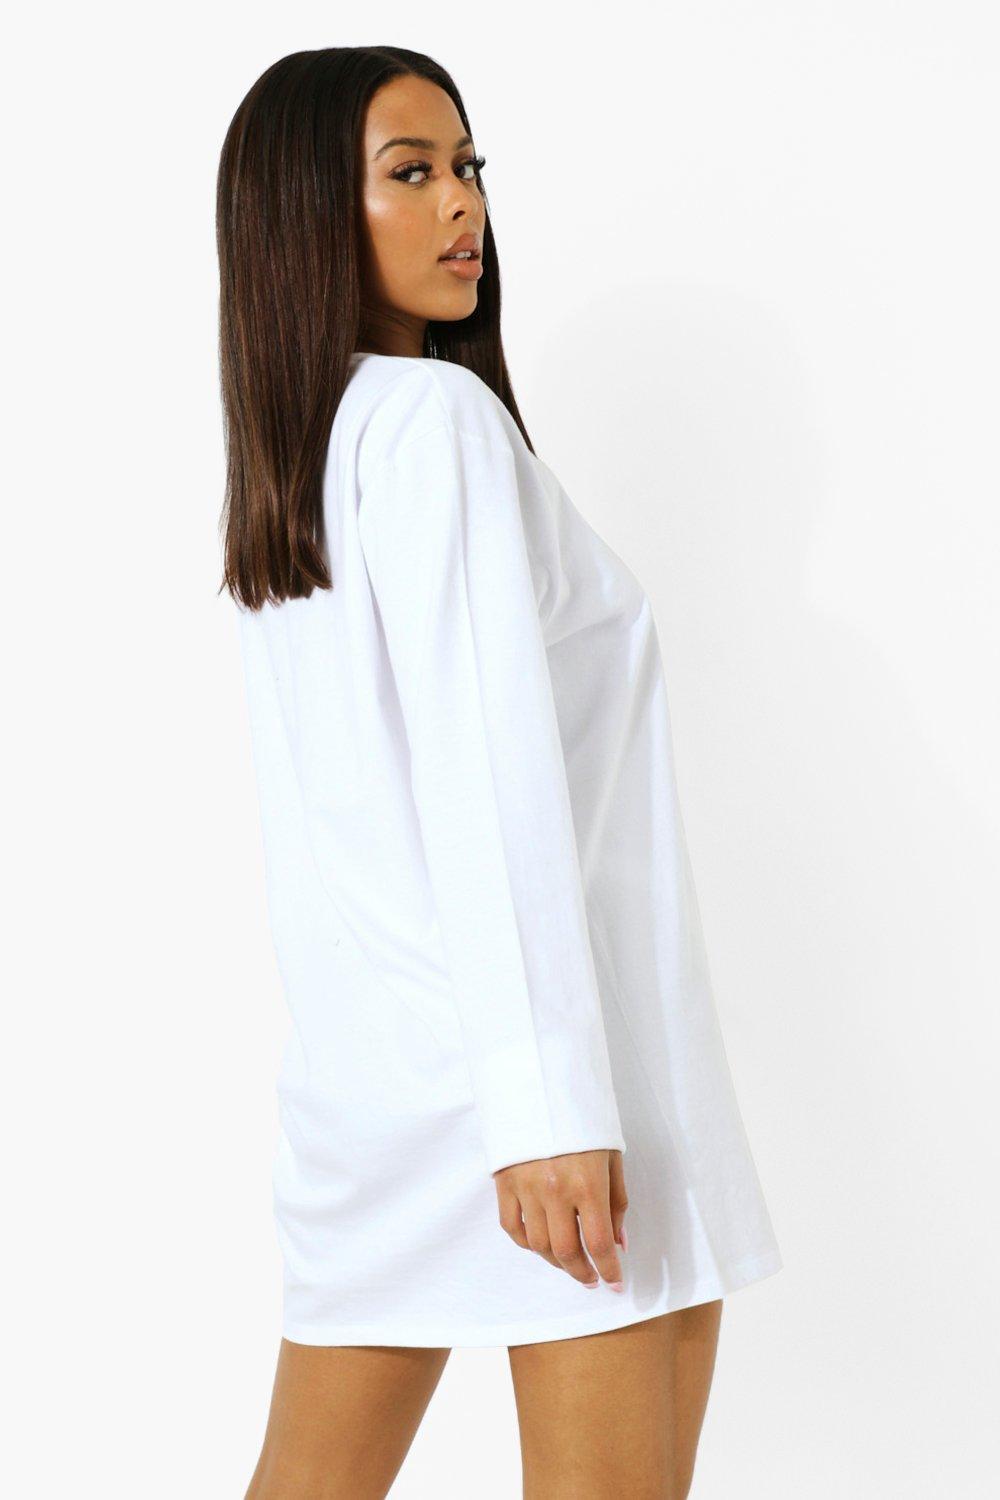 White Shirt Dress long Sleeve